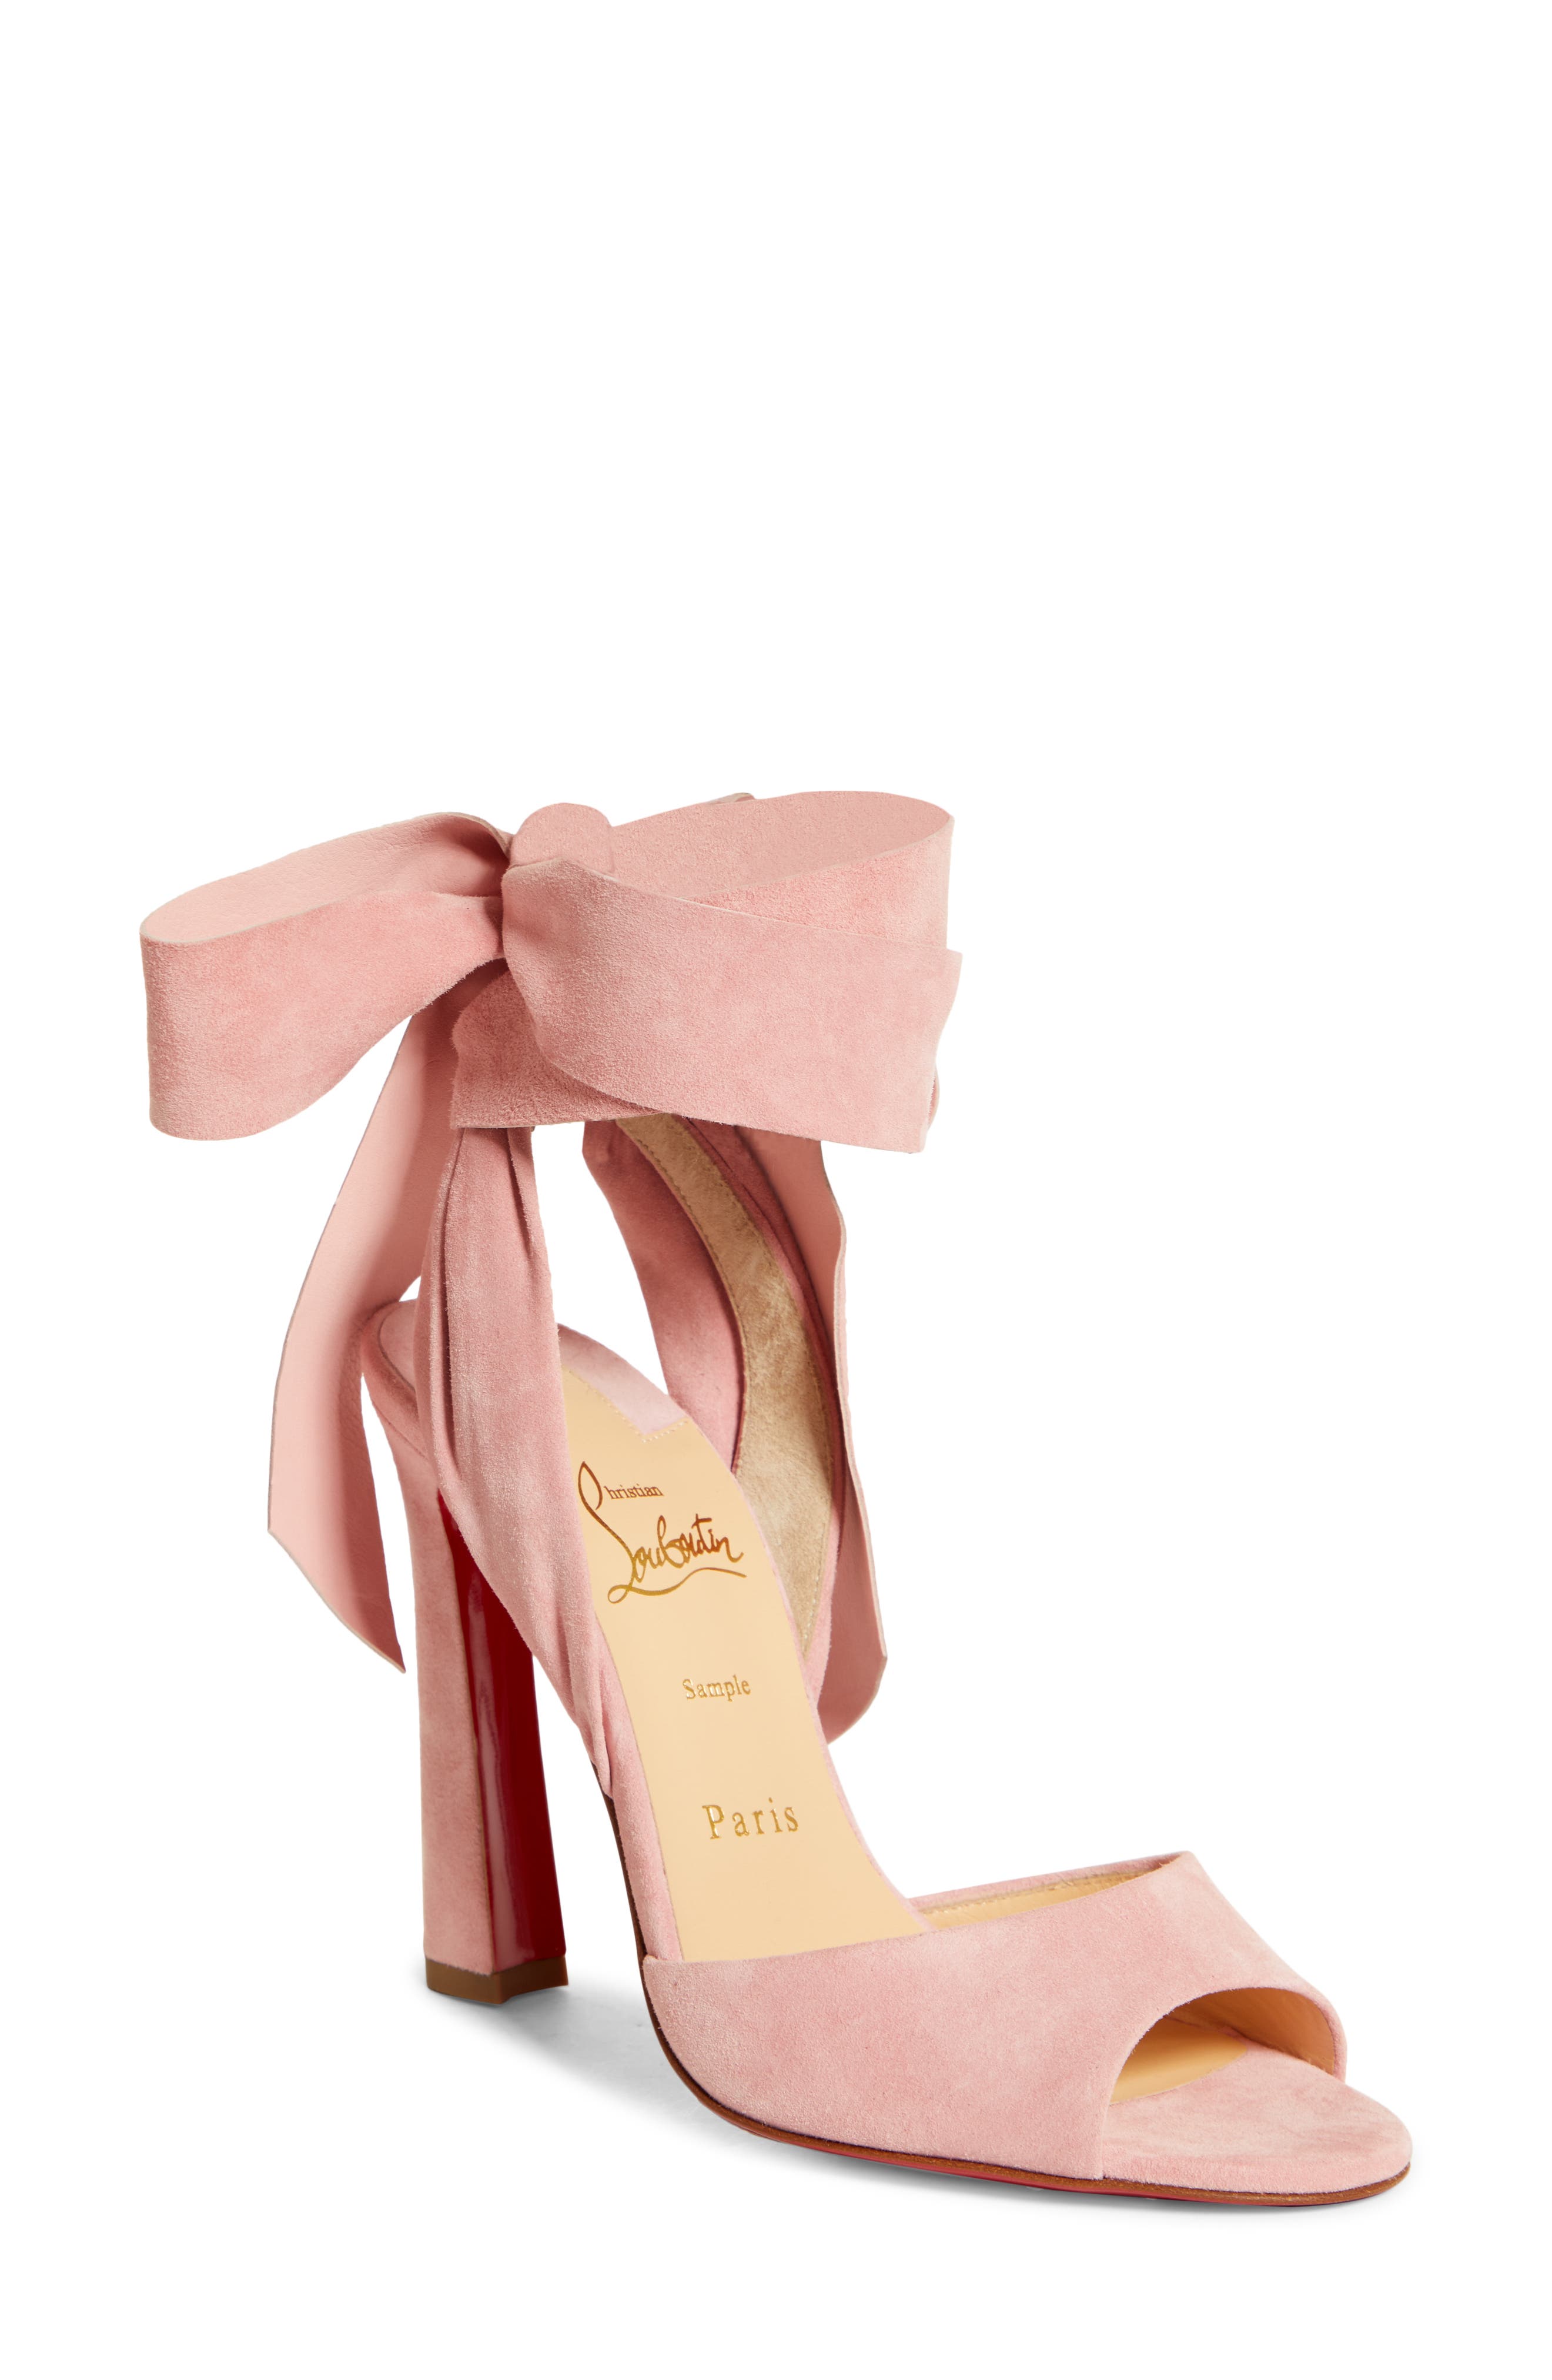 pink louboutin shoes